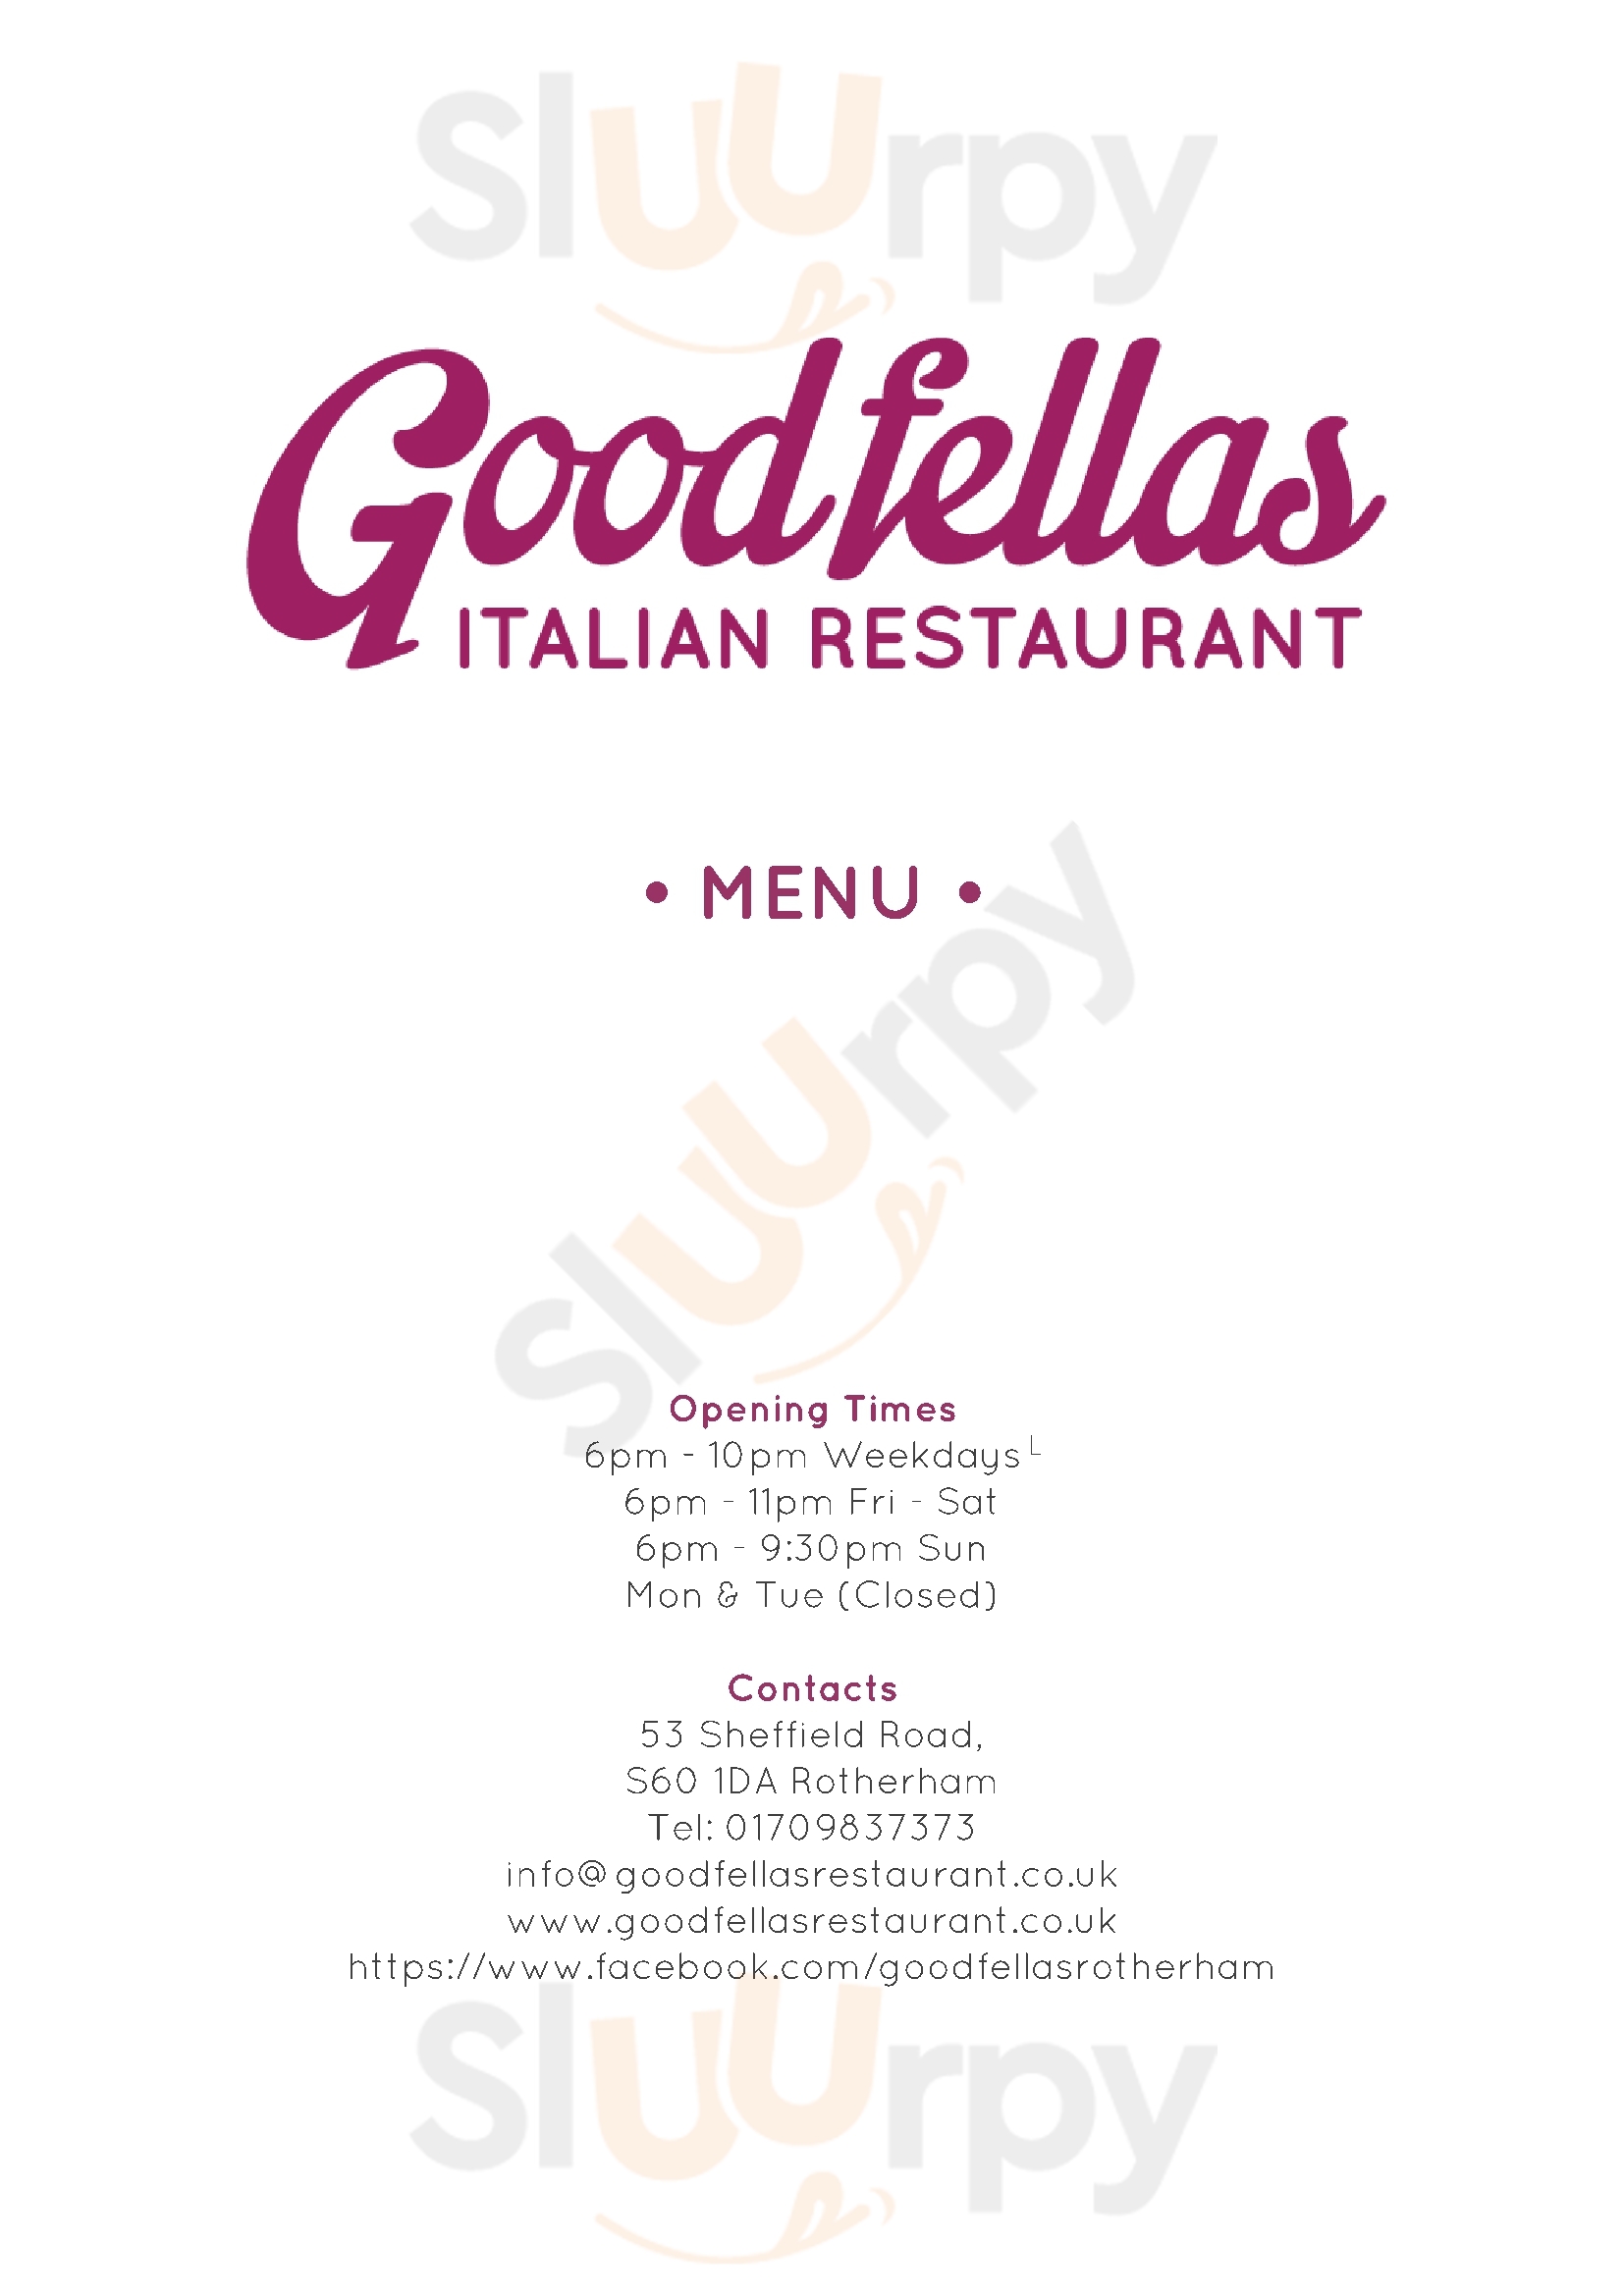 Goodfellas Italian Restaurant Rotherham Menu - 1